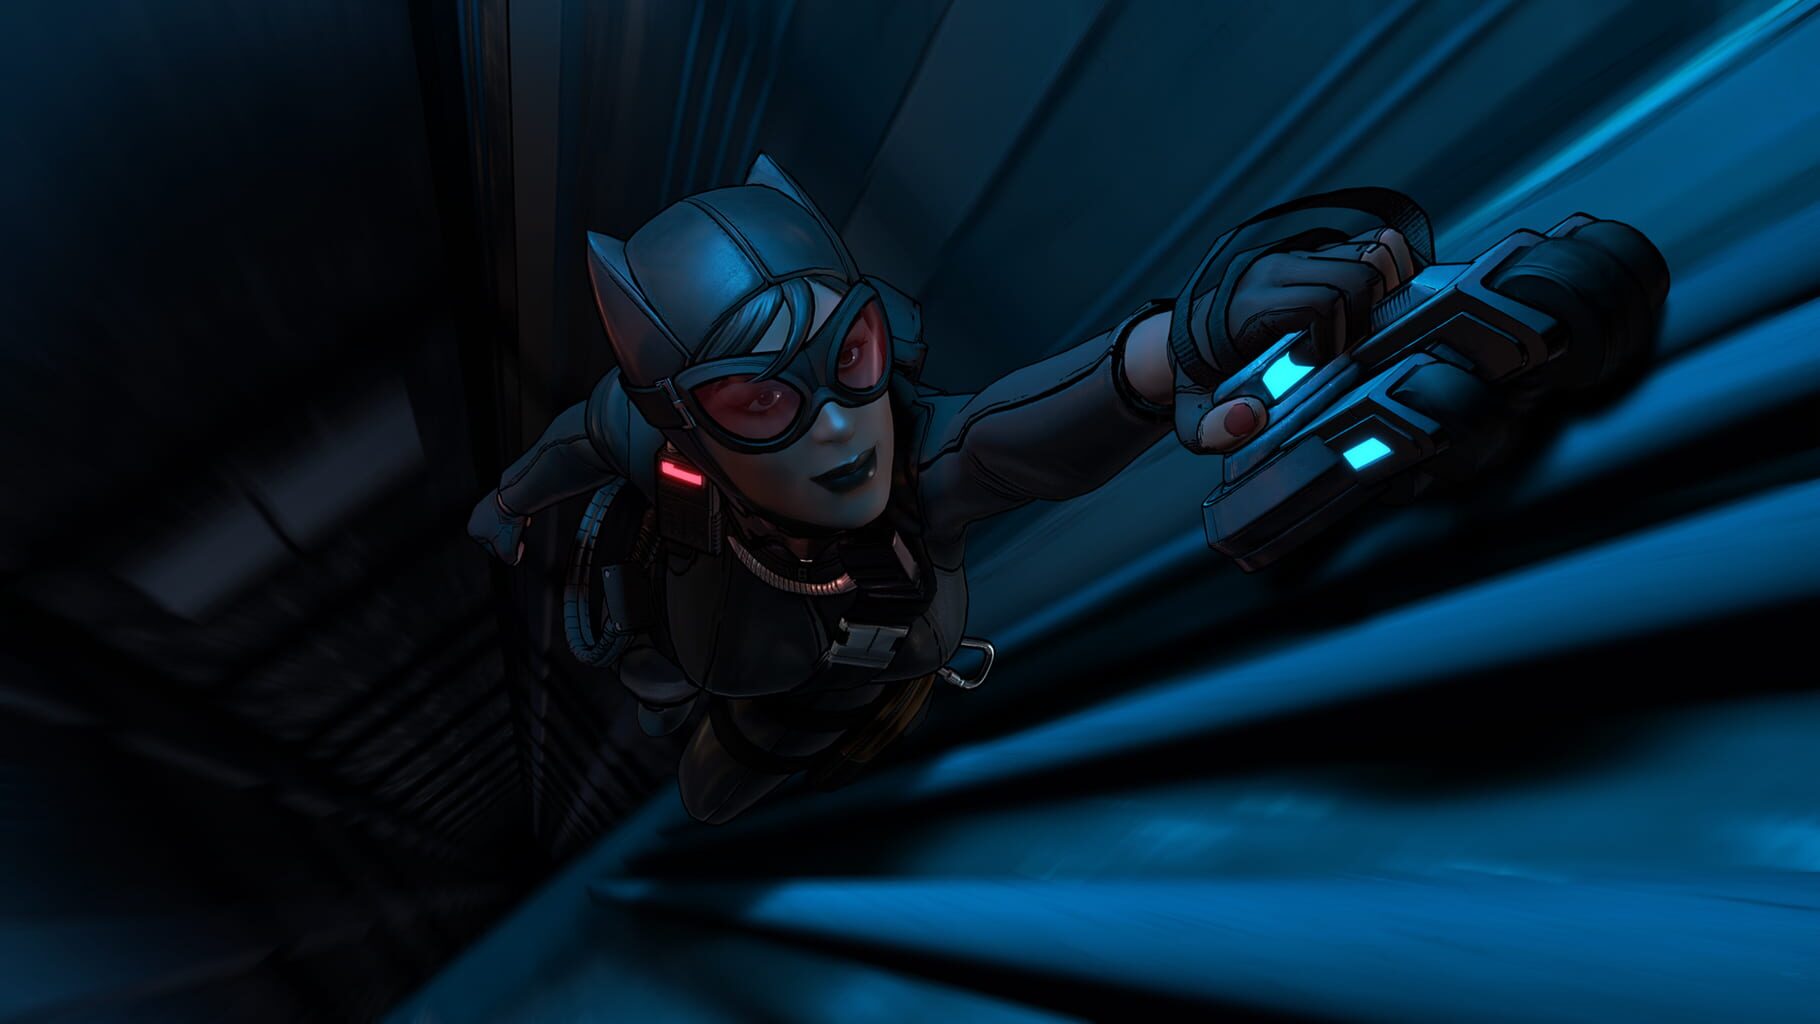 Batman - The Telltale Series screenshots